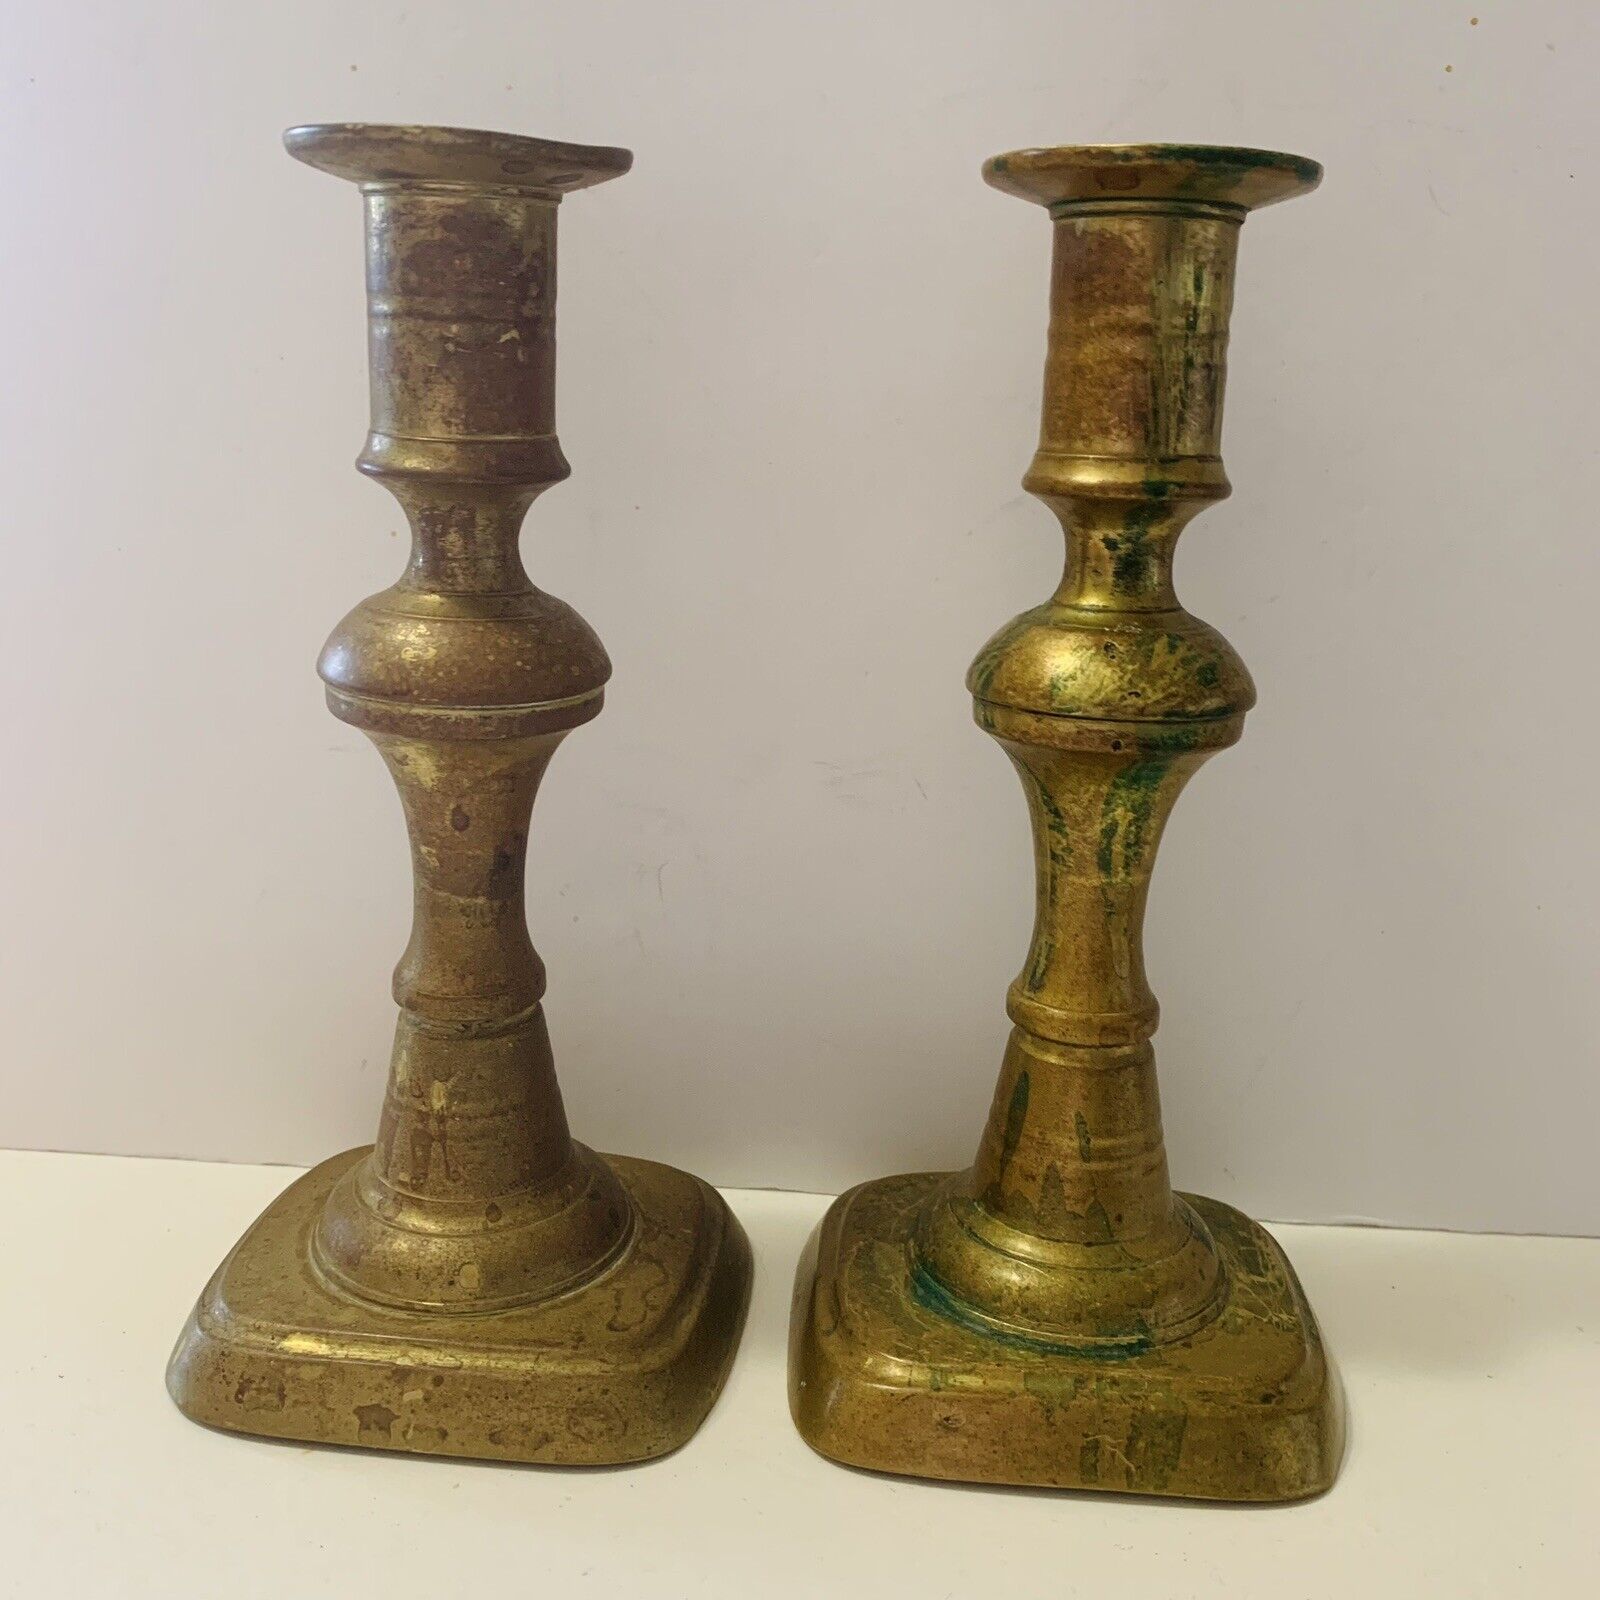 English Brass Candlestick Pair Antique 19th C 6.5” Tall Patina